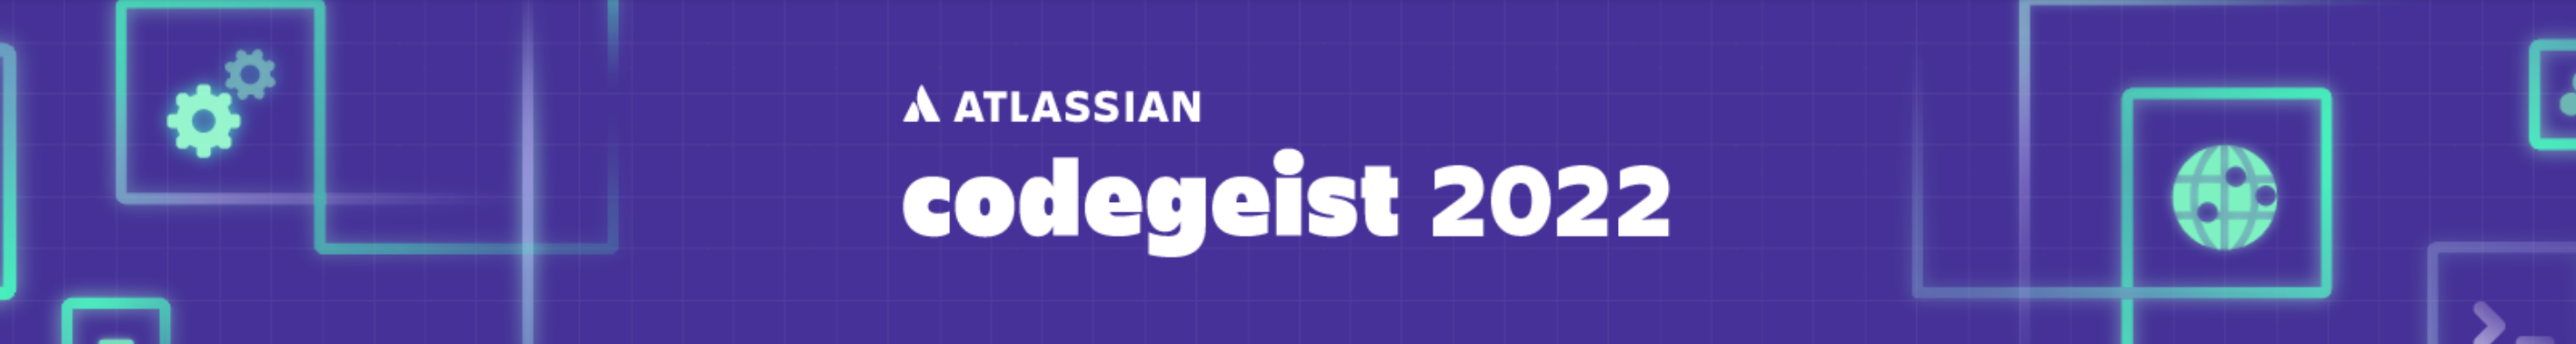 Atlassian Codegeist 2022 Seibert Media winners - codegeist banner